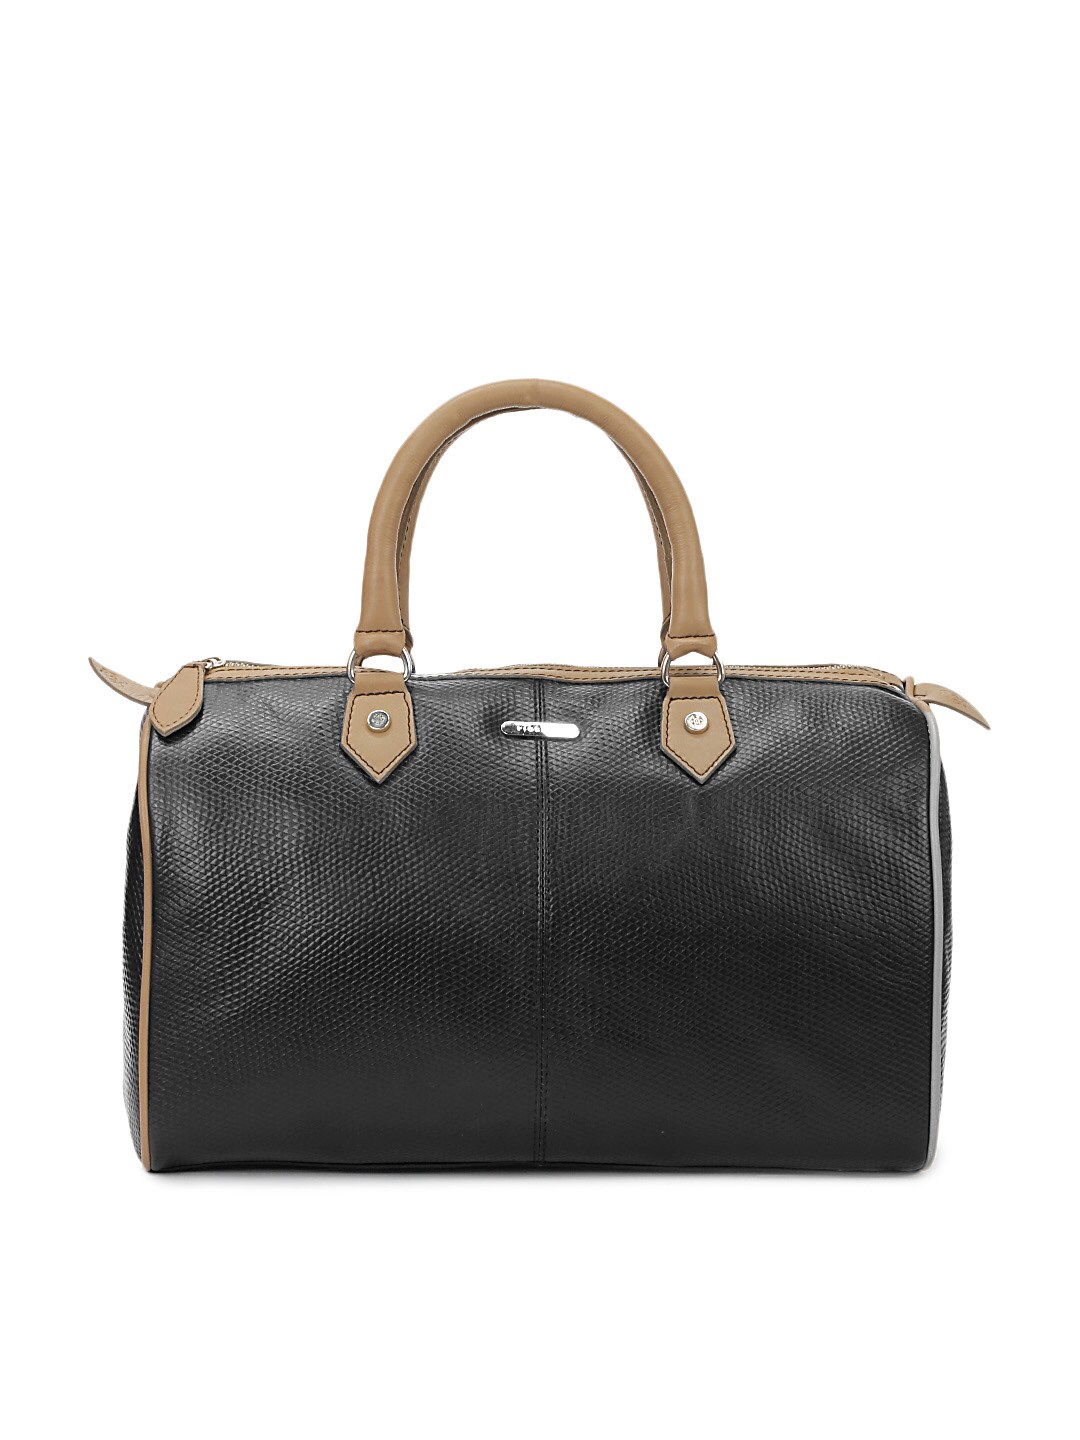 Fiorelli Women Black and Taupe Leather Handbag